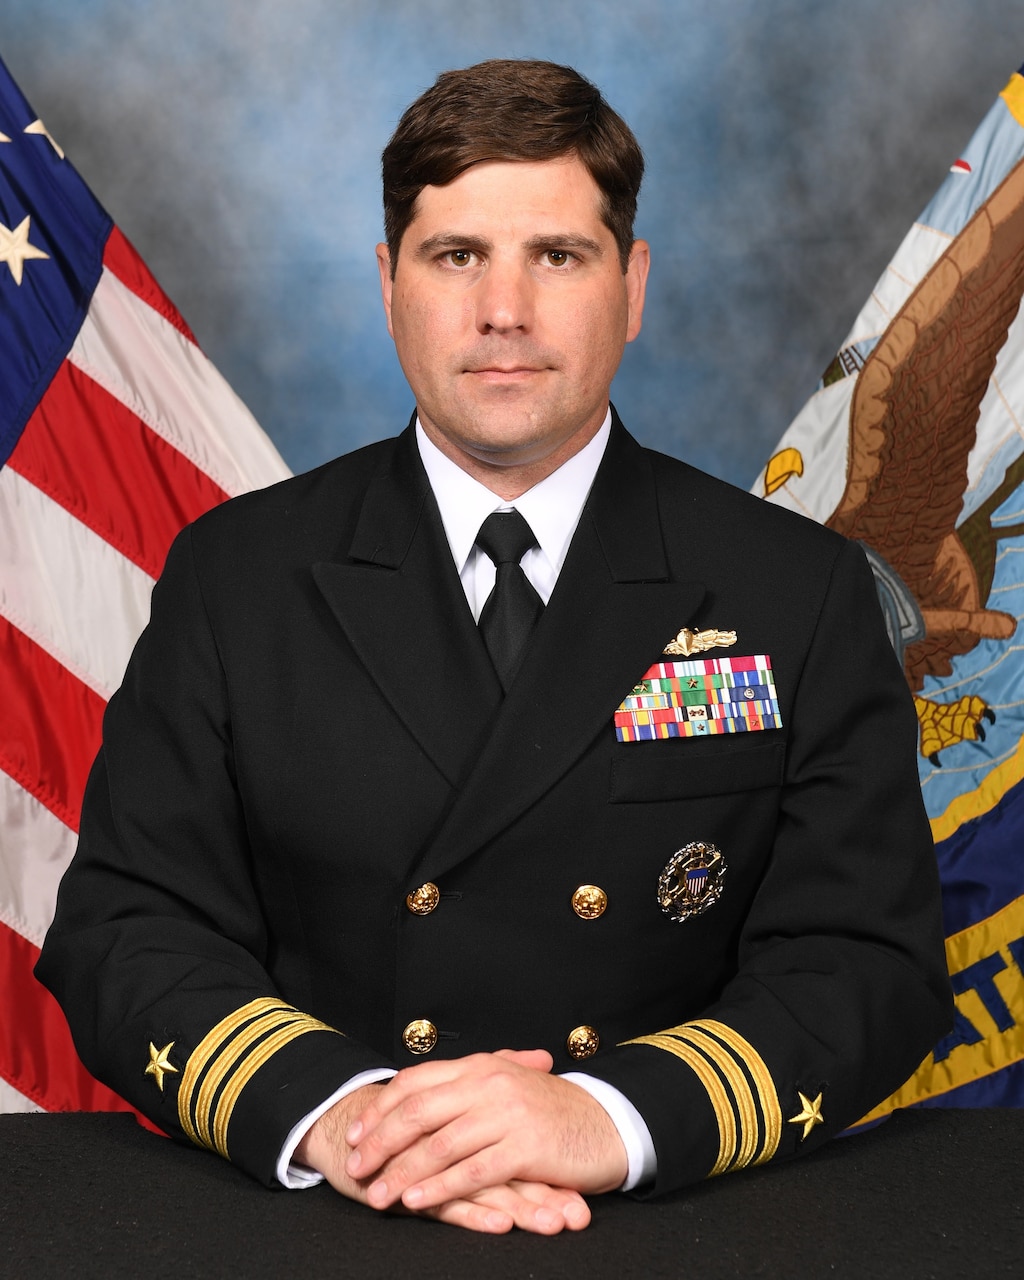 Commander Justin Bummara